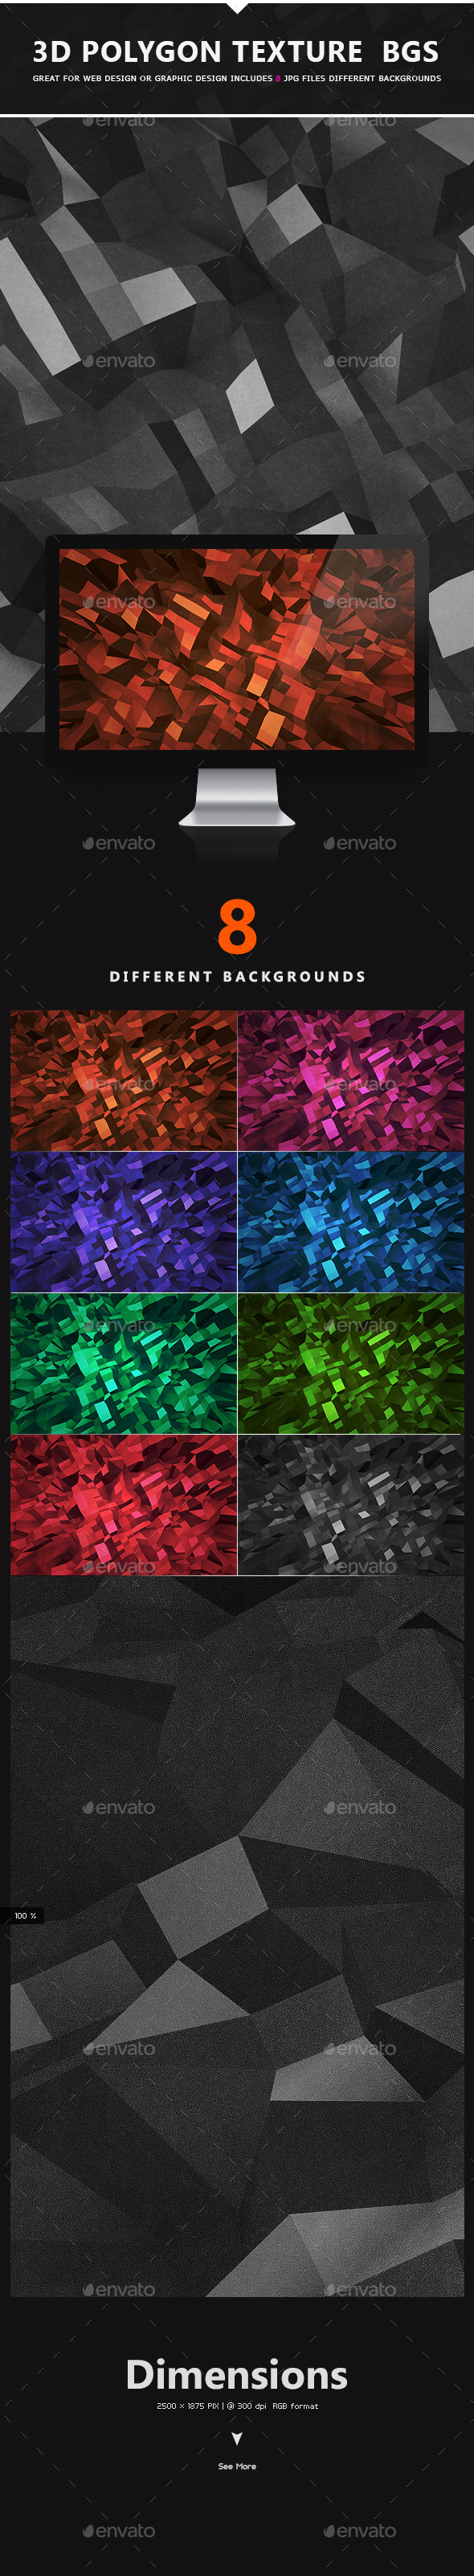 3D Polygon Texture Backgrounds